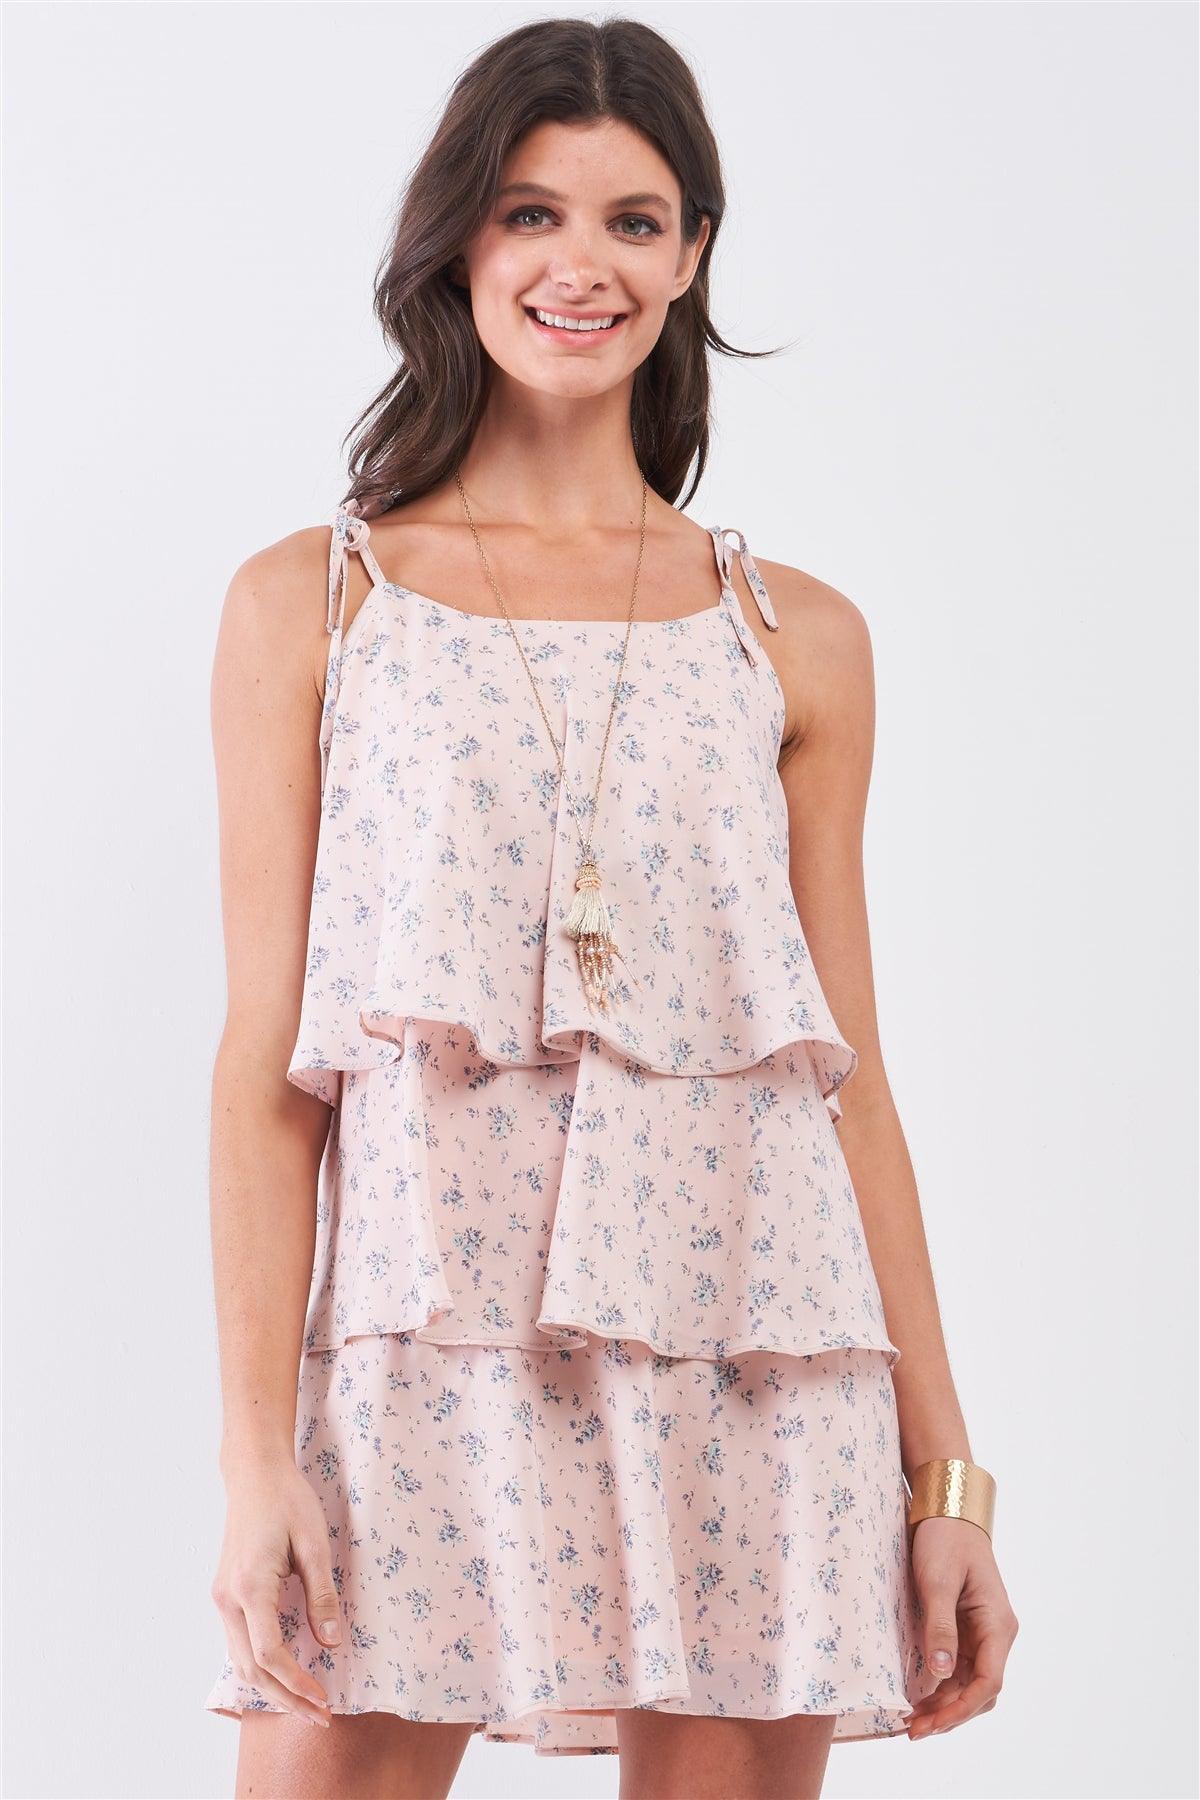 Blush Floral Print Sleeveless Self-Tie Shoulder Strap Detail Layered Flounce Mini Dress /1-1-2-1